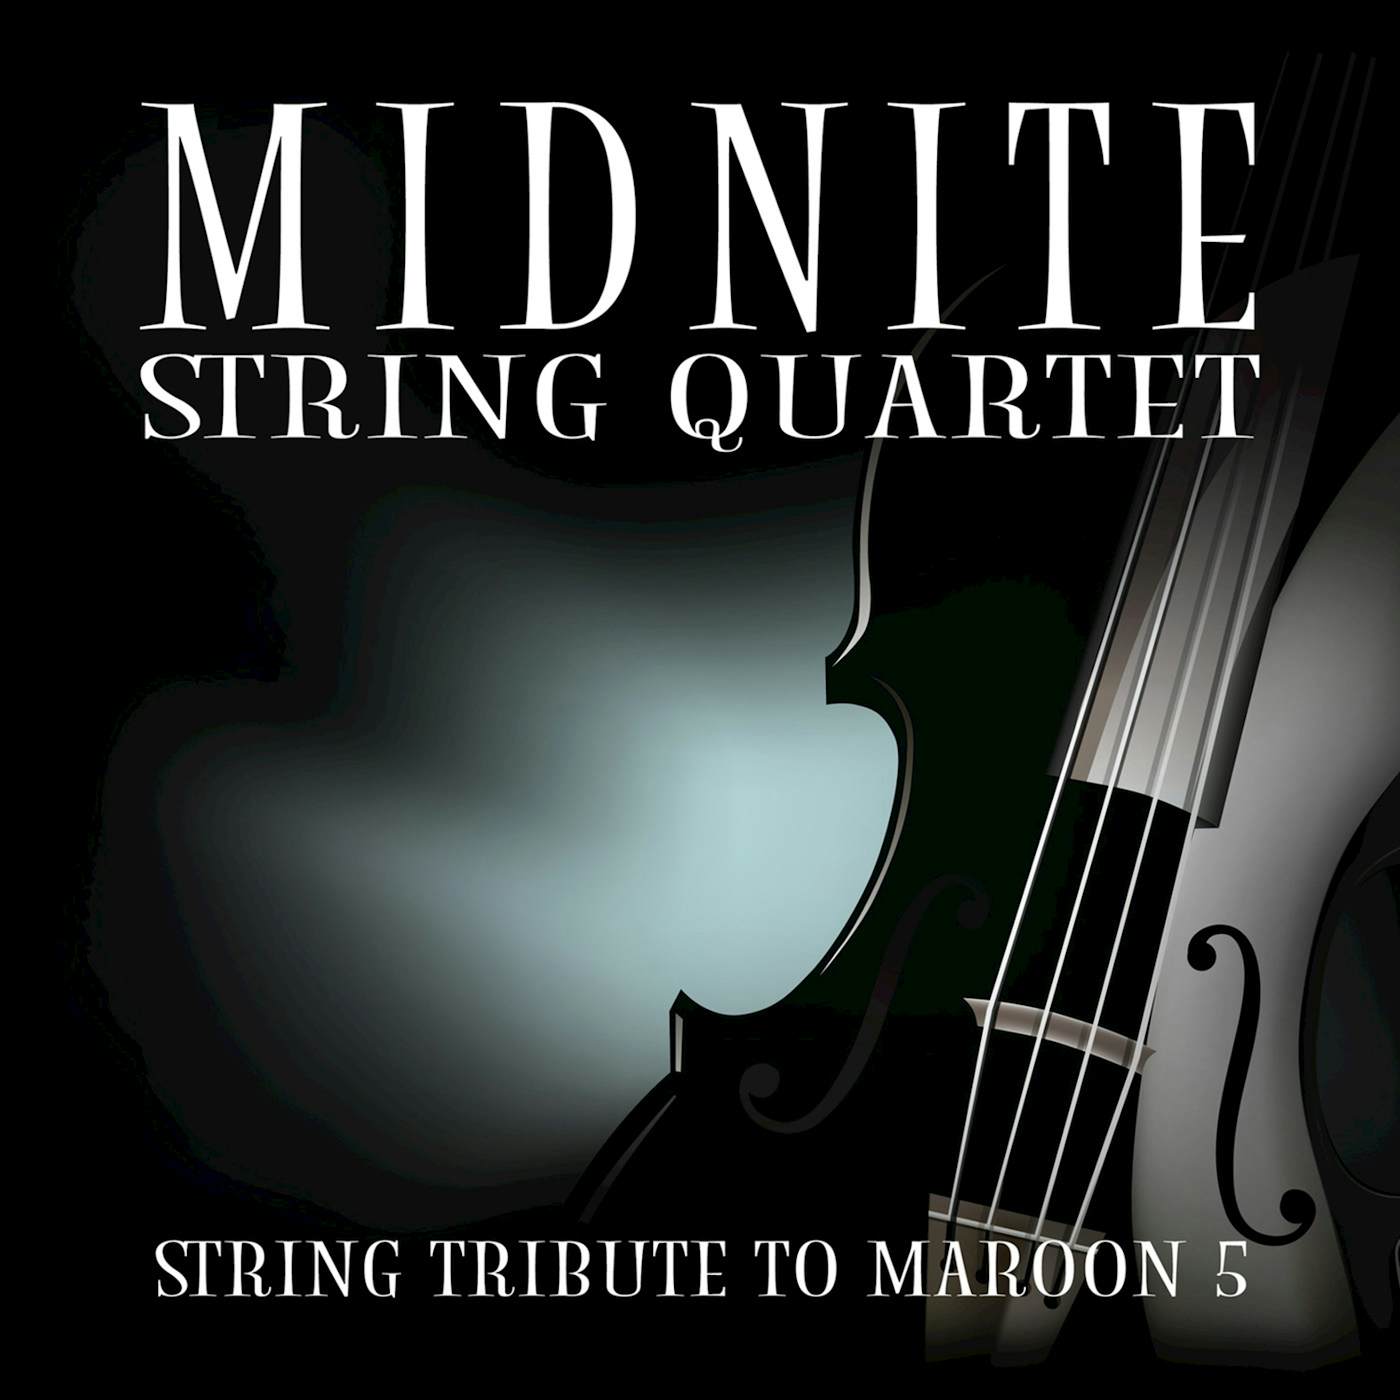 Midnite String Quartet PERFORMS MAROON 5 (MOD) CD